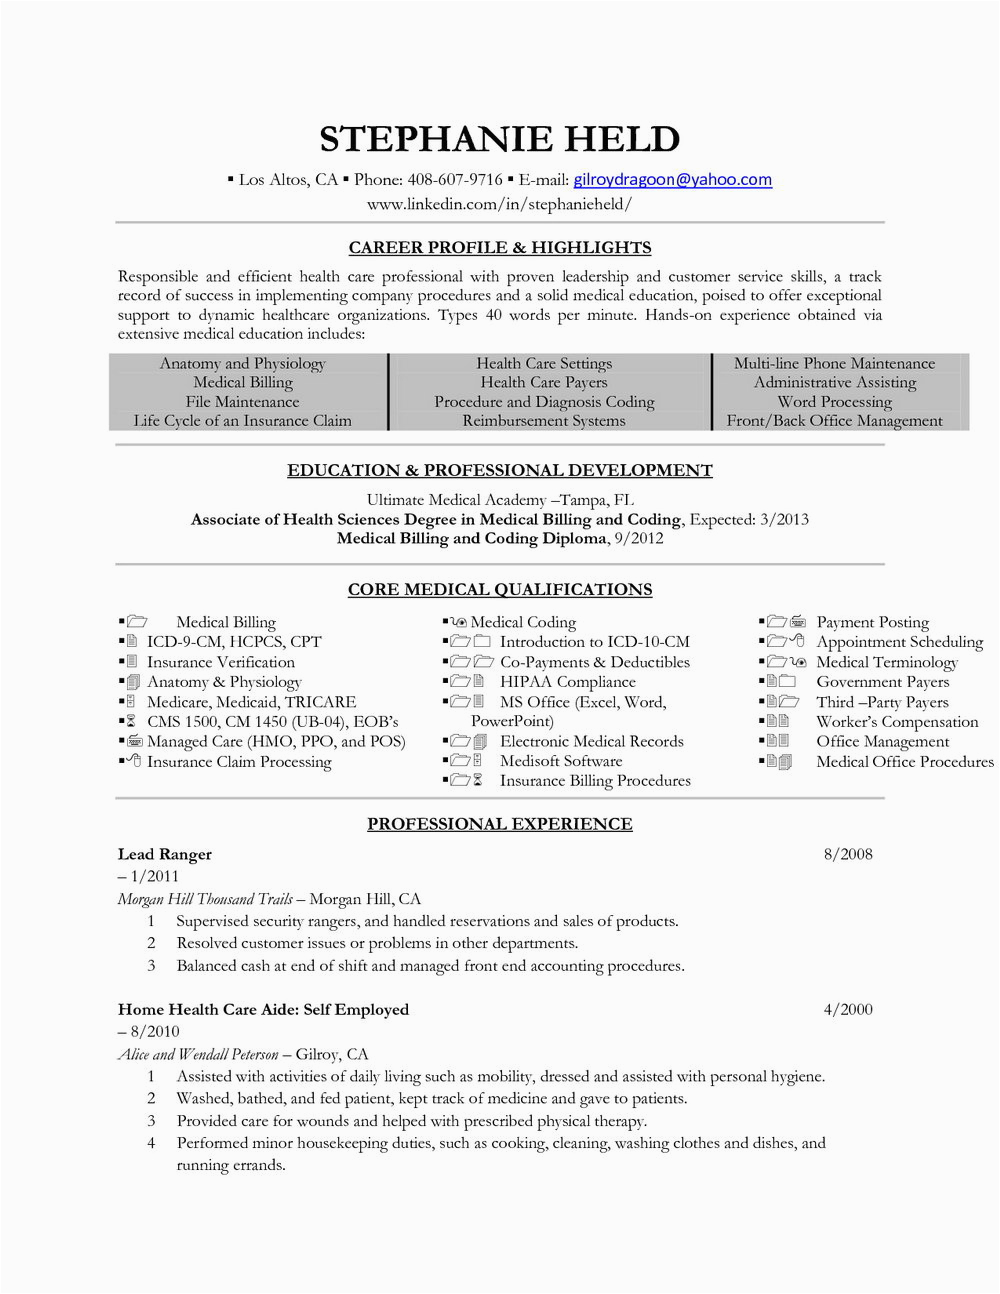 Entry Level Medical Coding and Billing Resume Samples Resume for Medical Billing and Coding Specialist